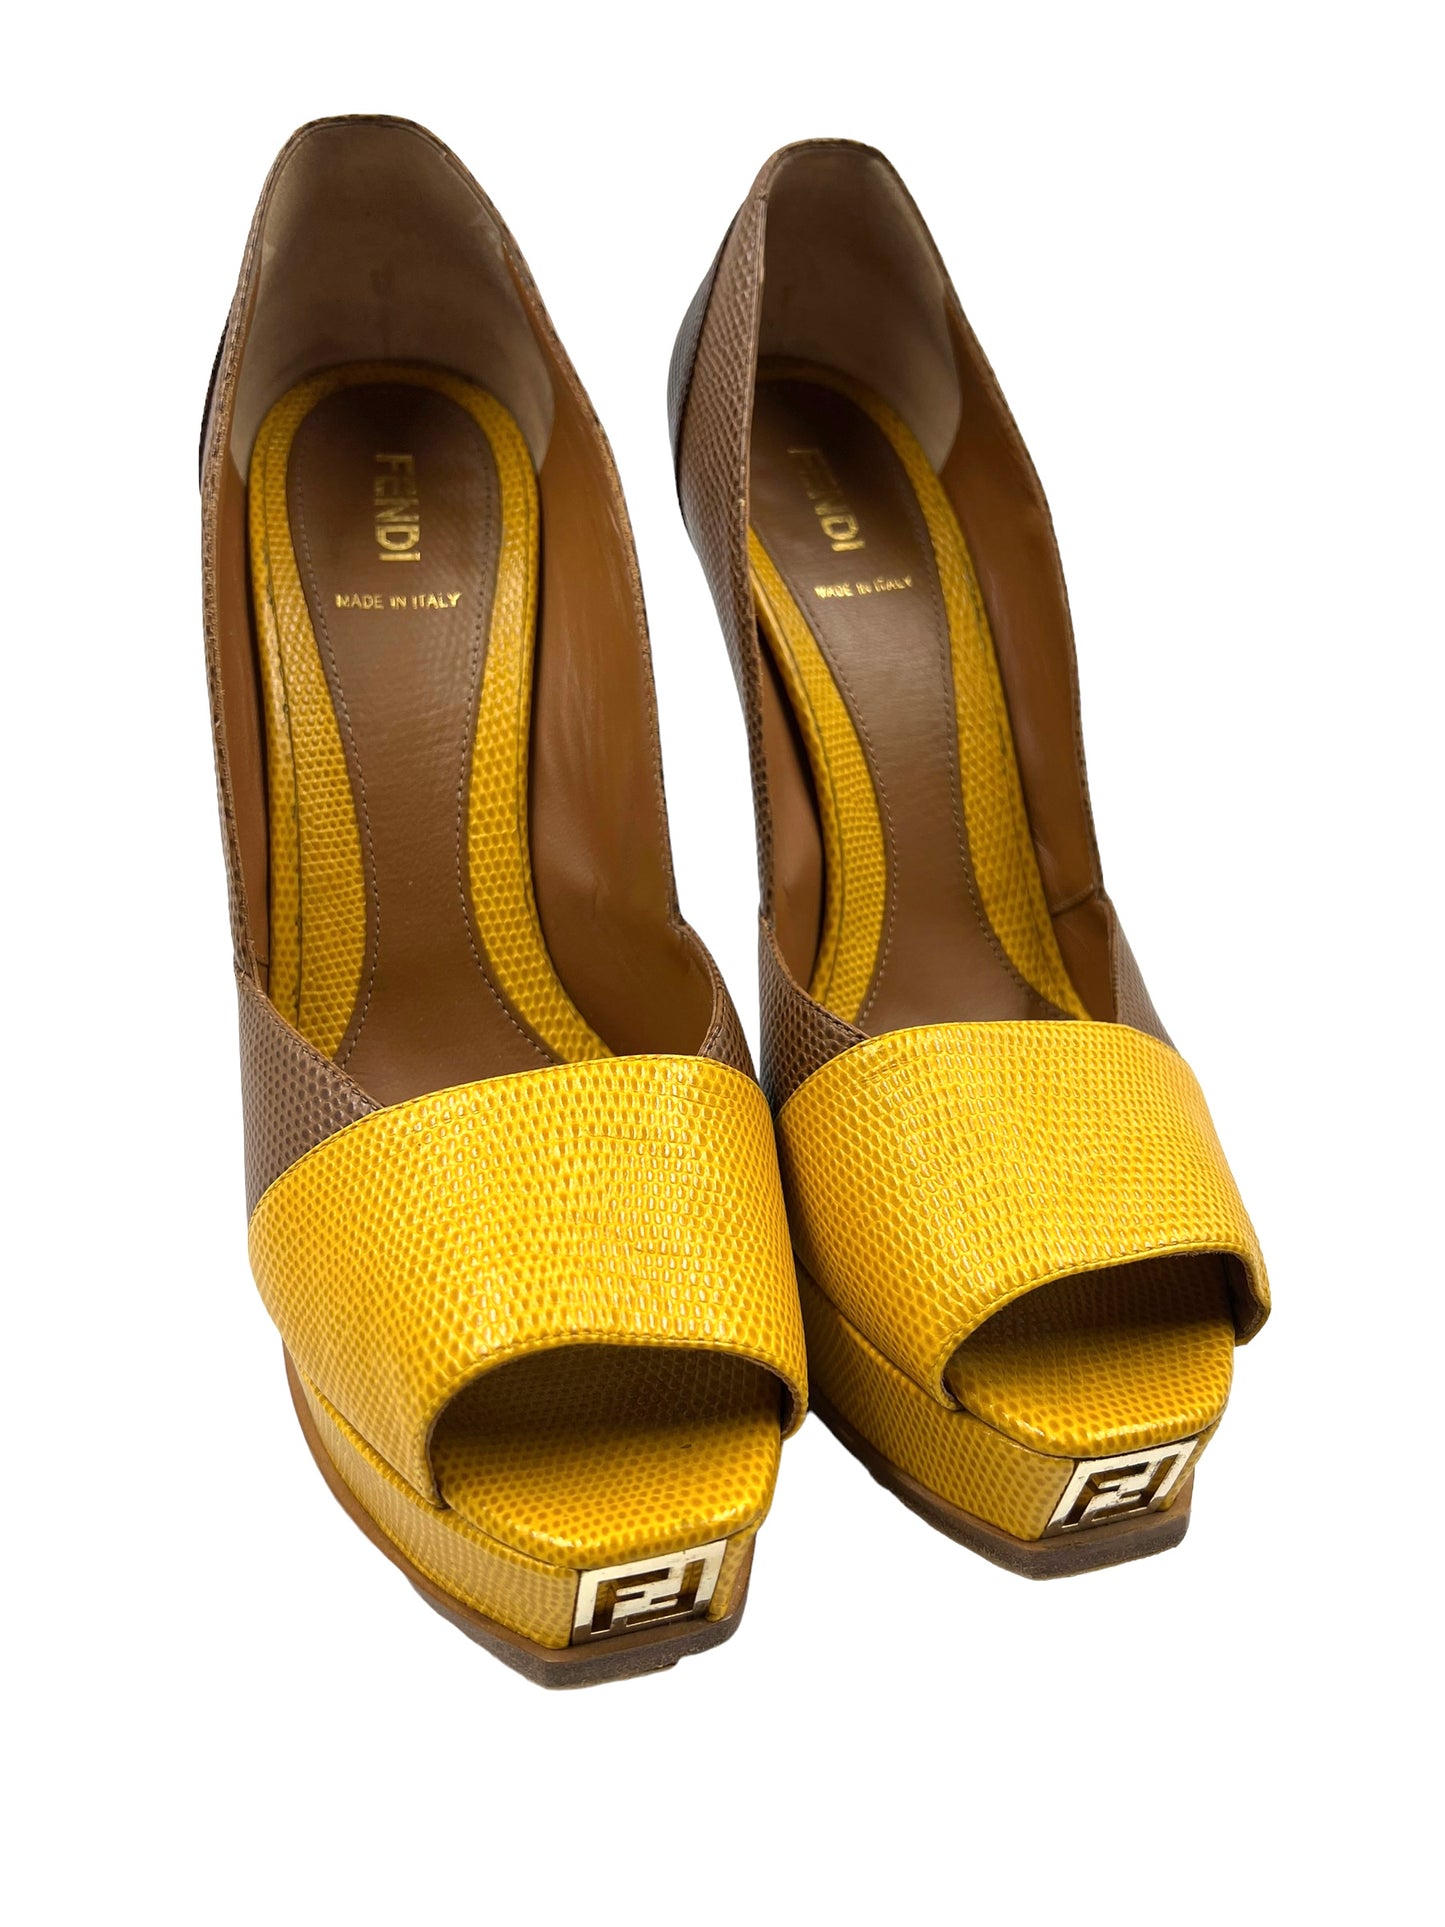 Fendi Size 40 Color Block 'Fendista' Platform Heels